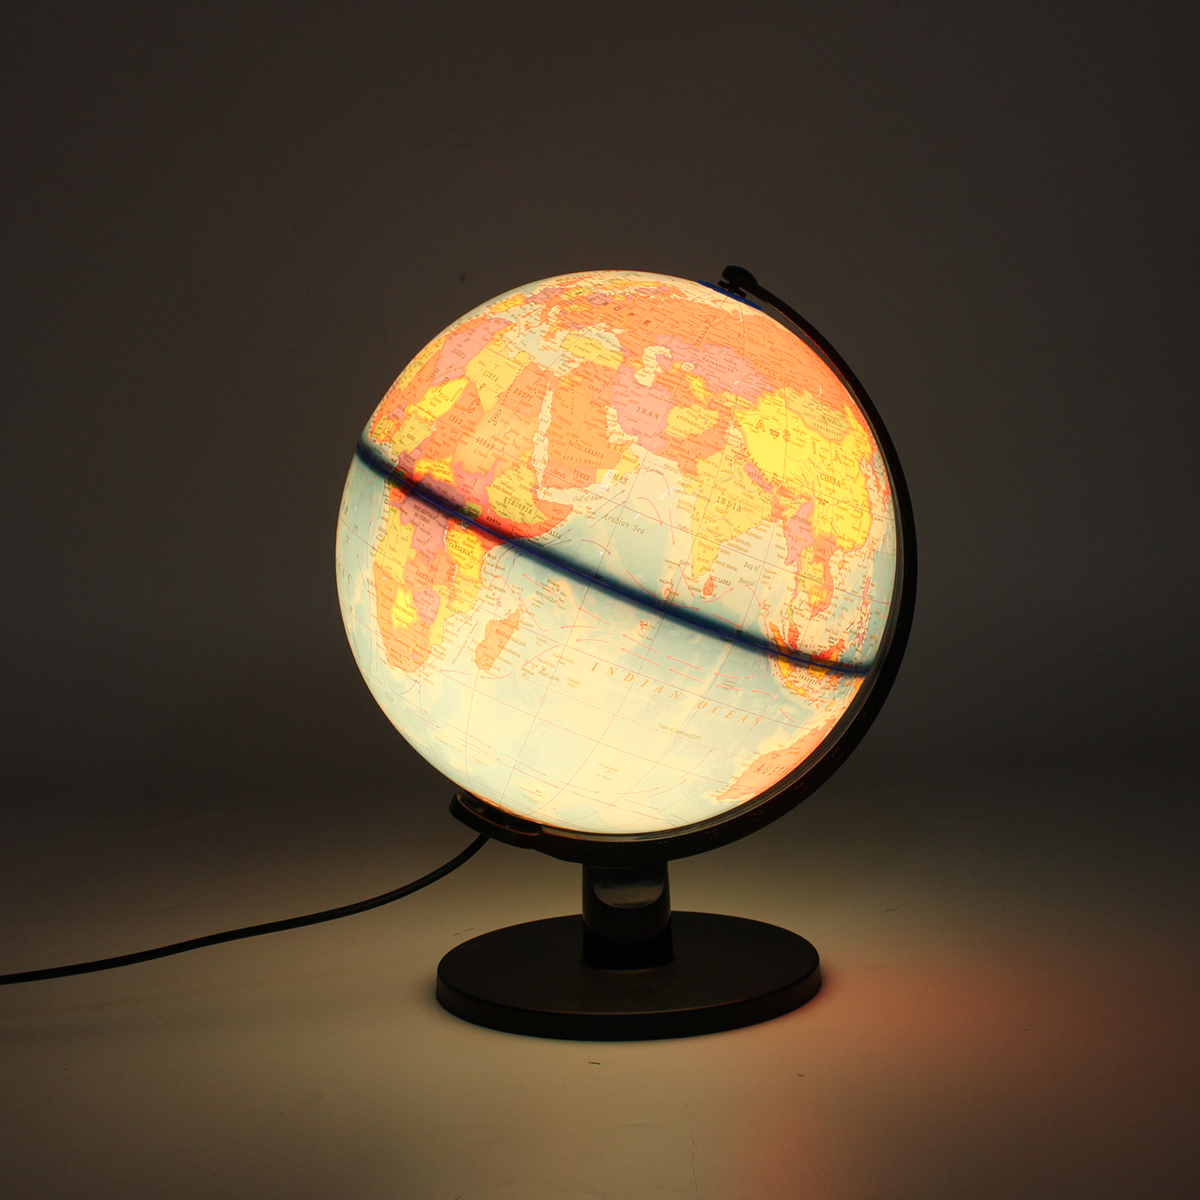 25cm-110V-World-Globe-Night-Light-Geography-LED-Lamp-Kids-Bedroom-Decor-Gift-US-Plug-1390550-5